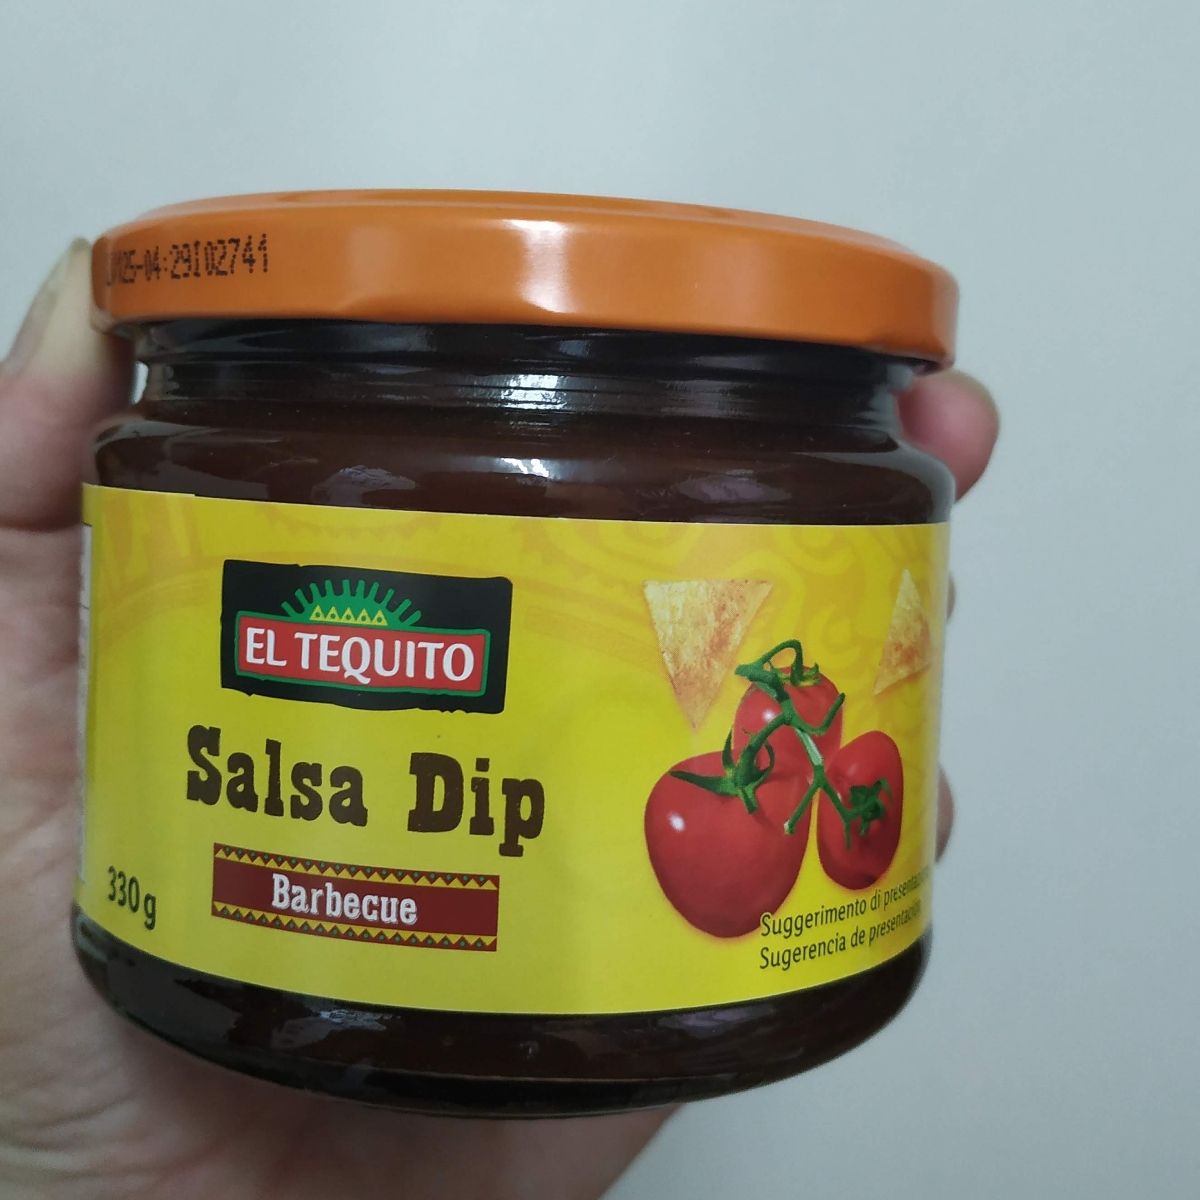 El Tequito Salsa abillion Review Dip Barbecue 